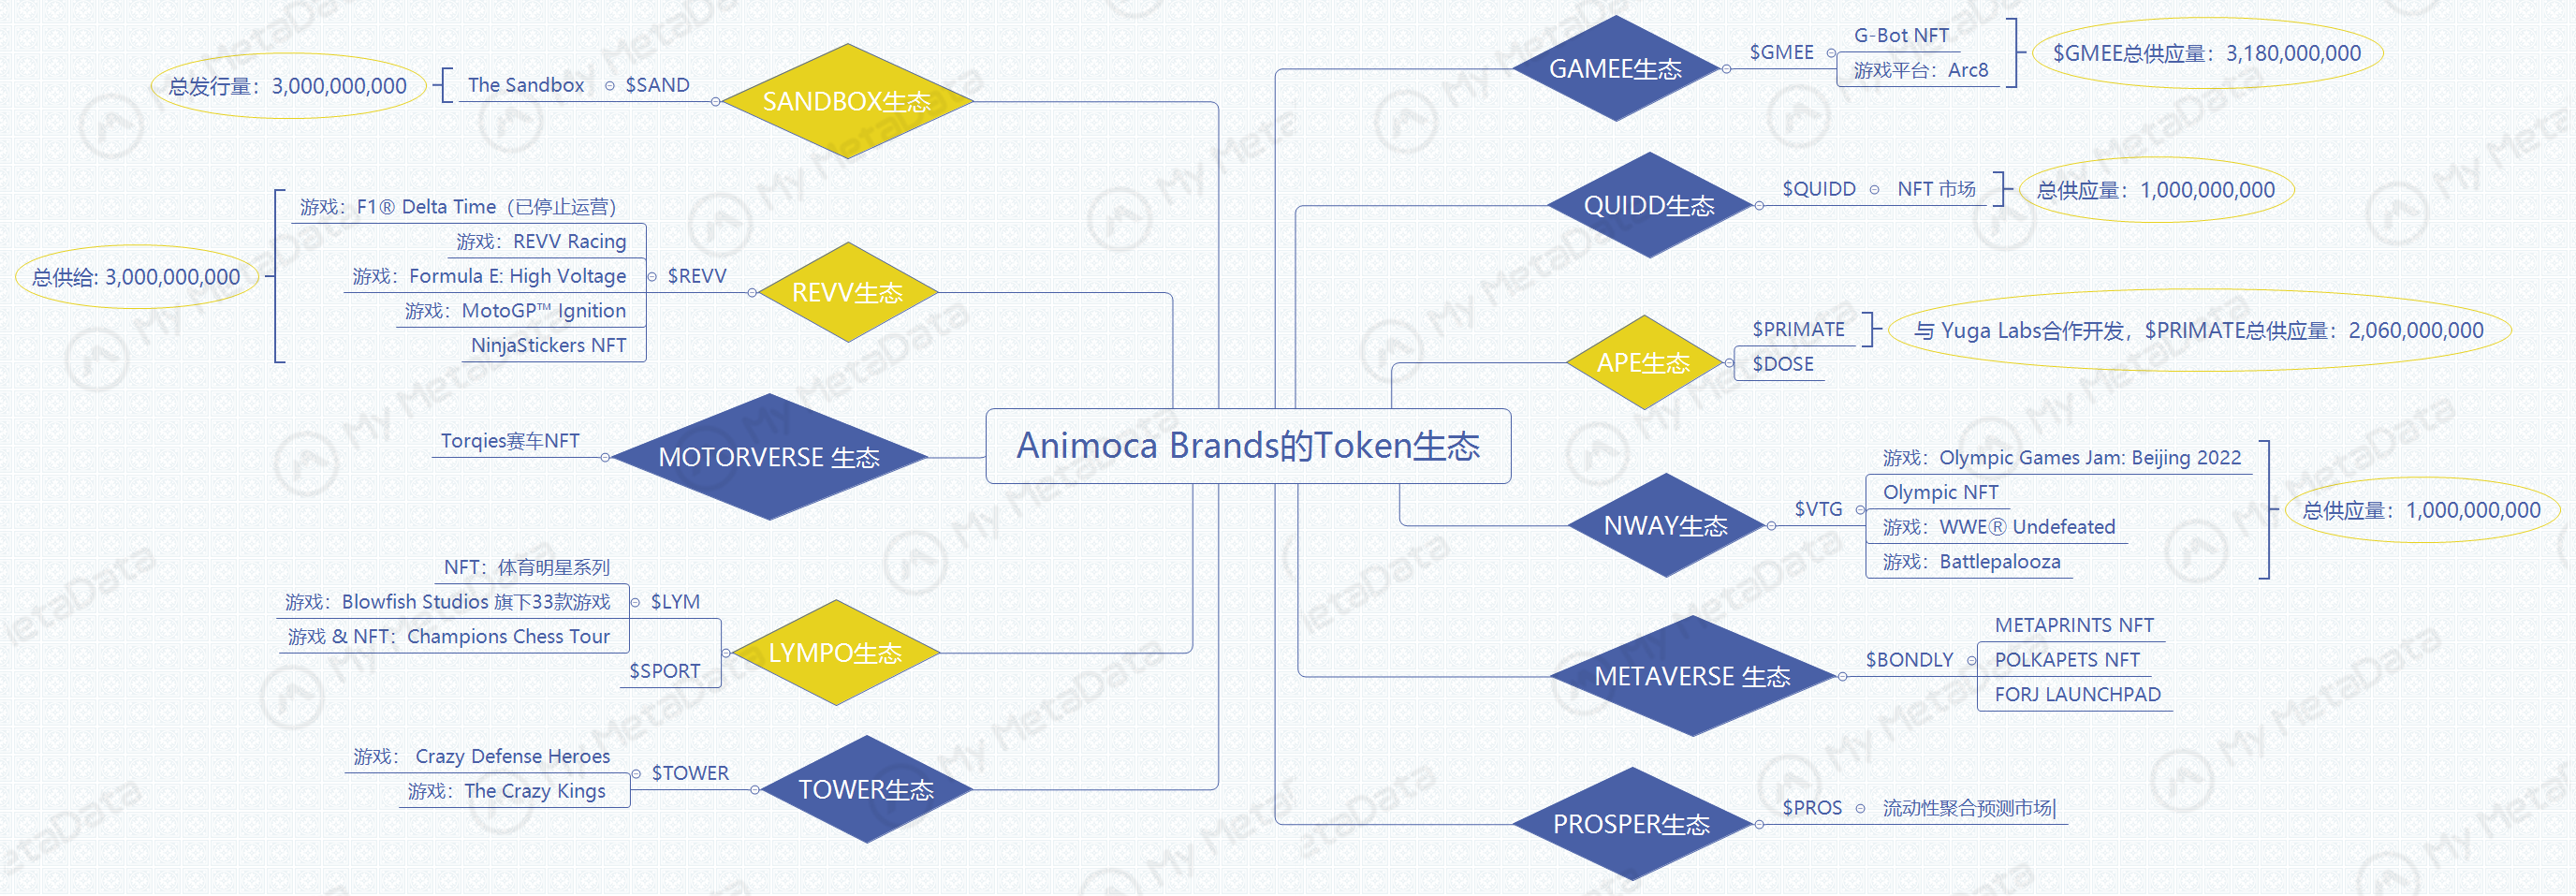 Animoca Brands 一手扶持的链游生态，你了解多少？